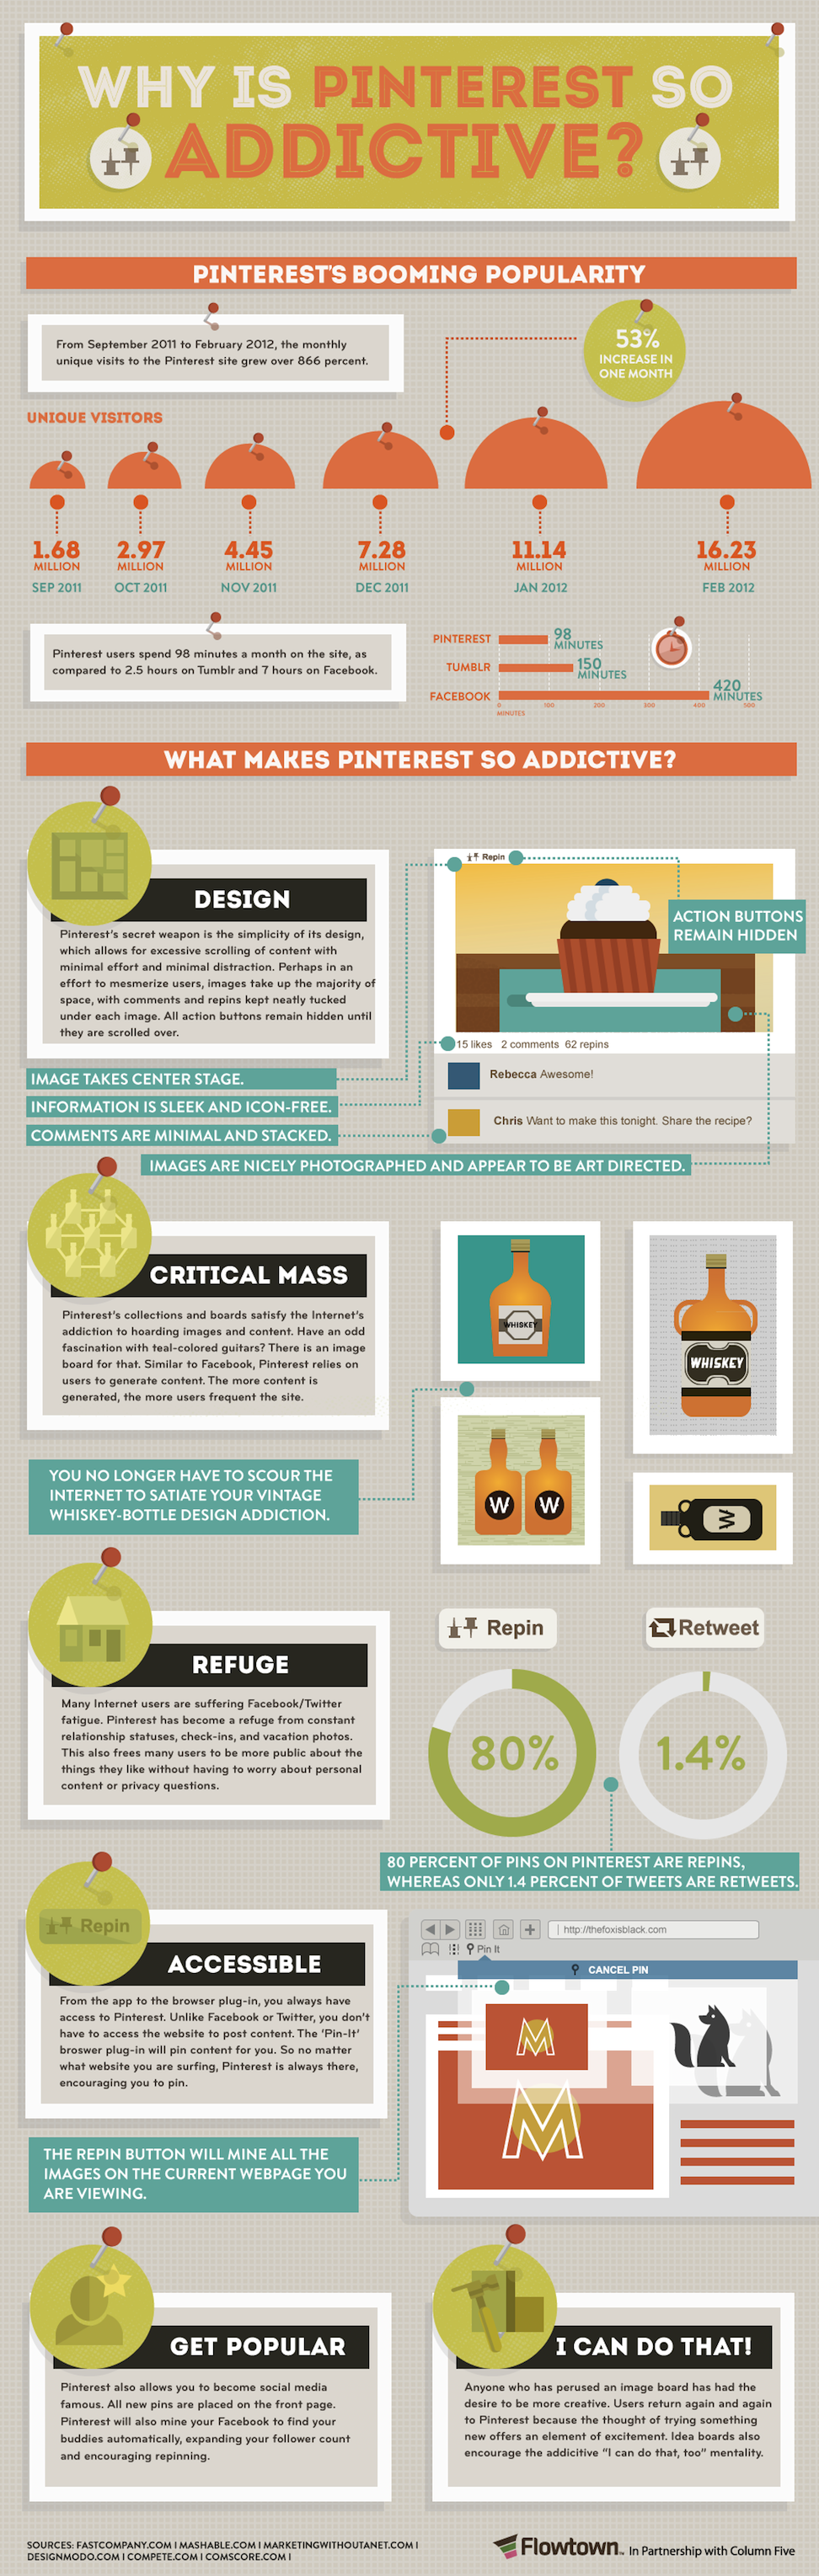 Pinterest infographic